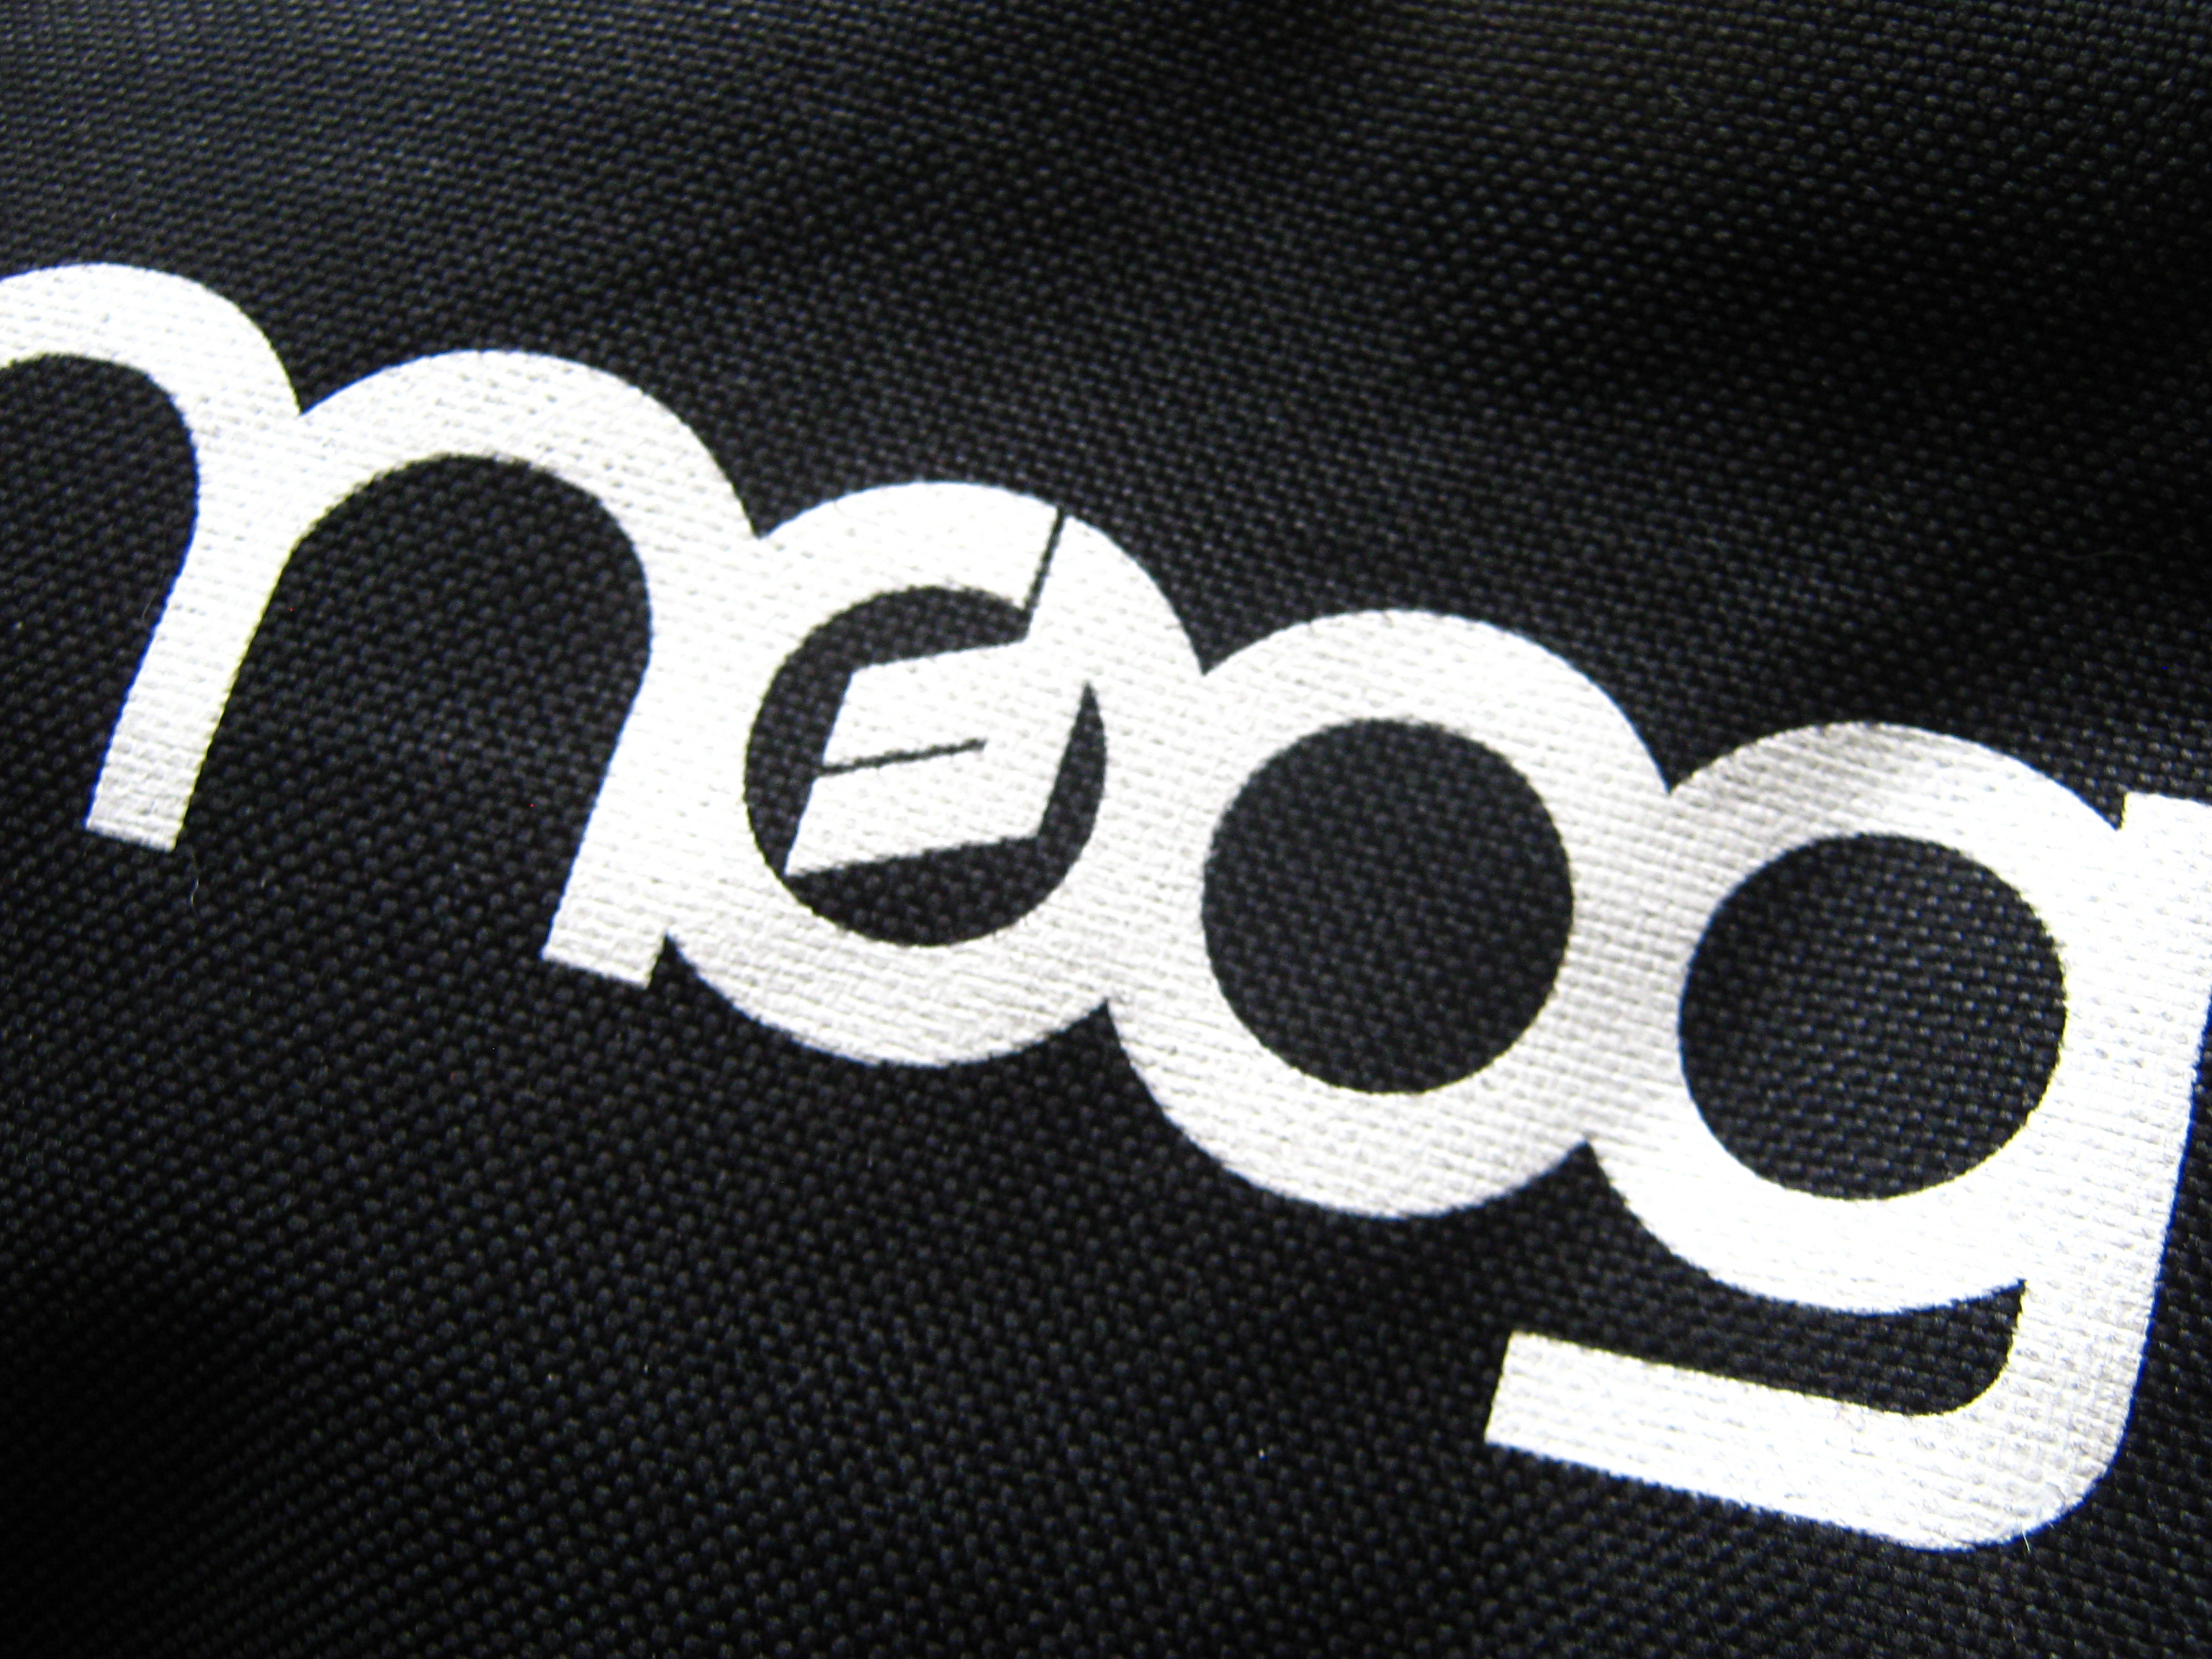 File:Moog logo on Theremini gig bag (photo by Audiotecna).jpg ...